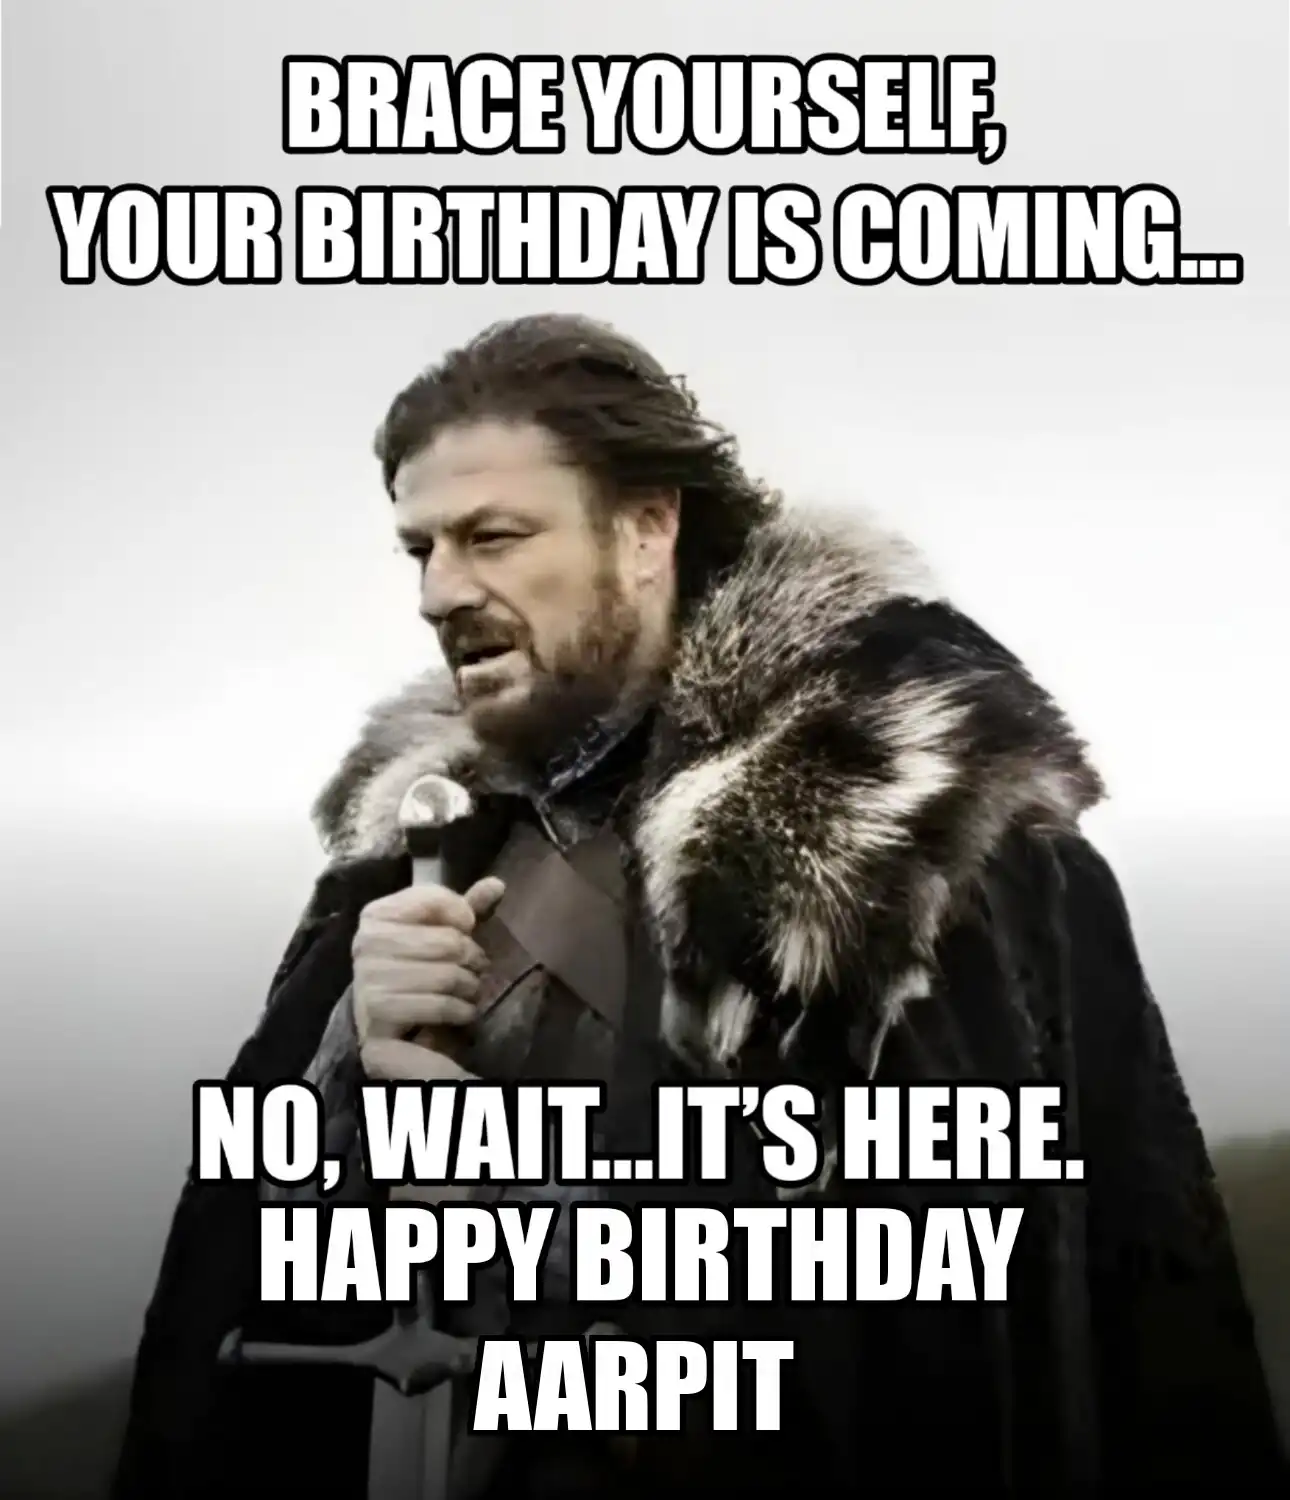 Happy Birthday Aarpit Brace Yourself Your Birthday Is Coming Meme